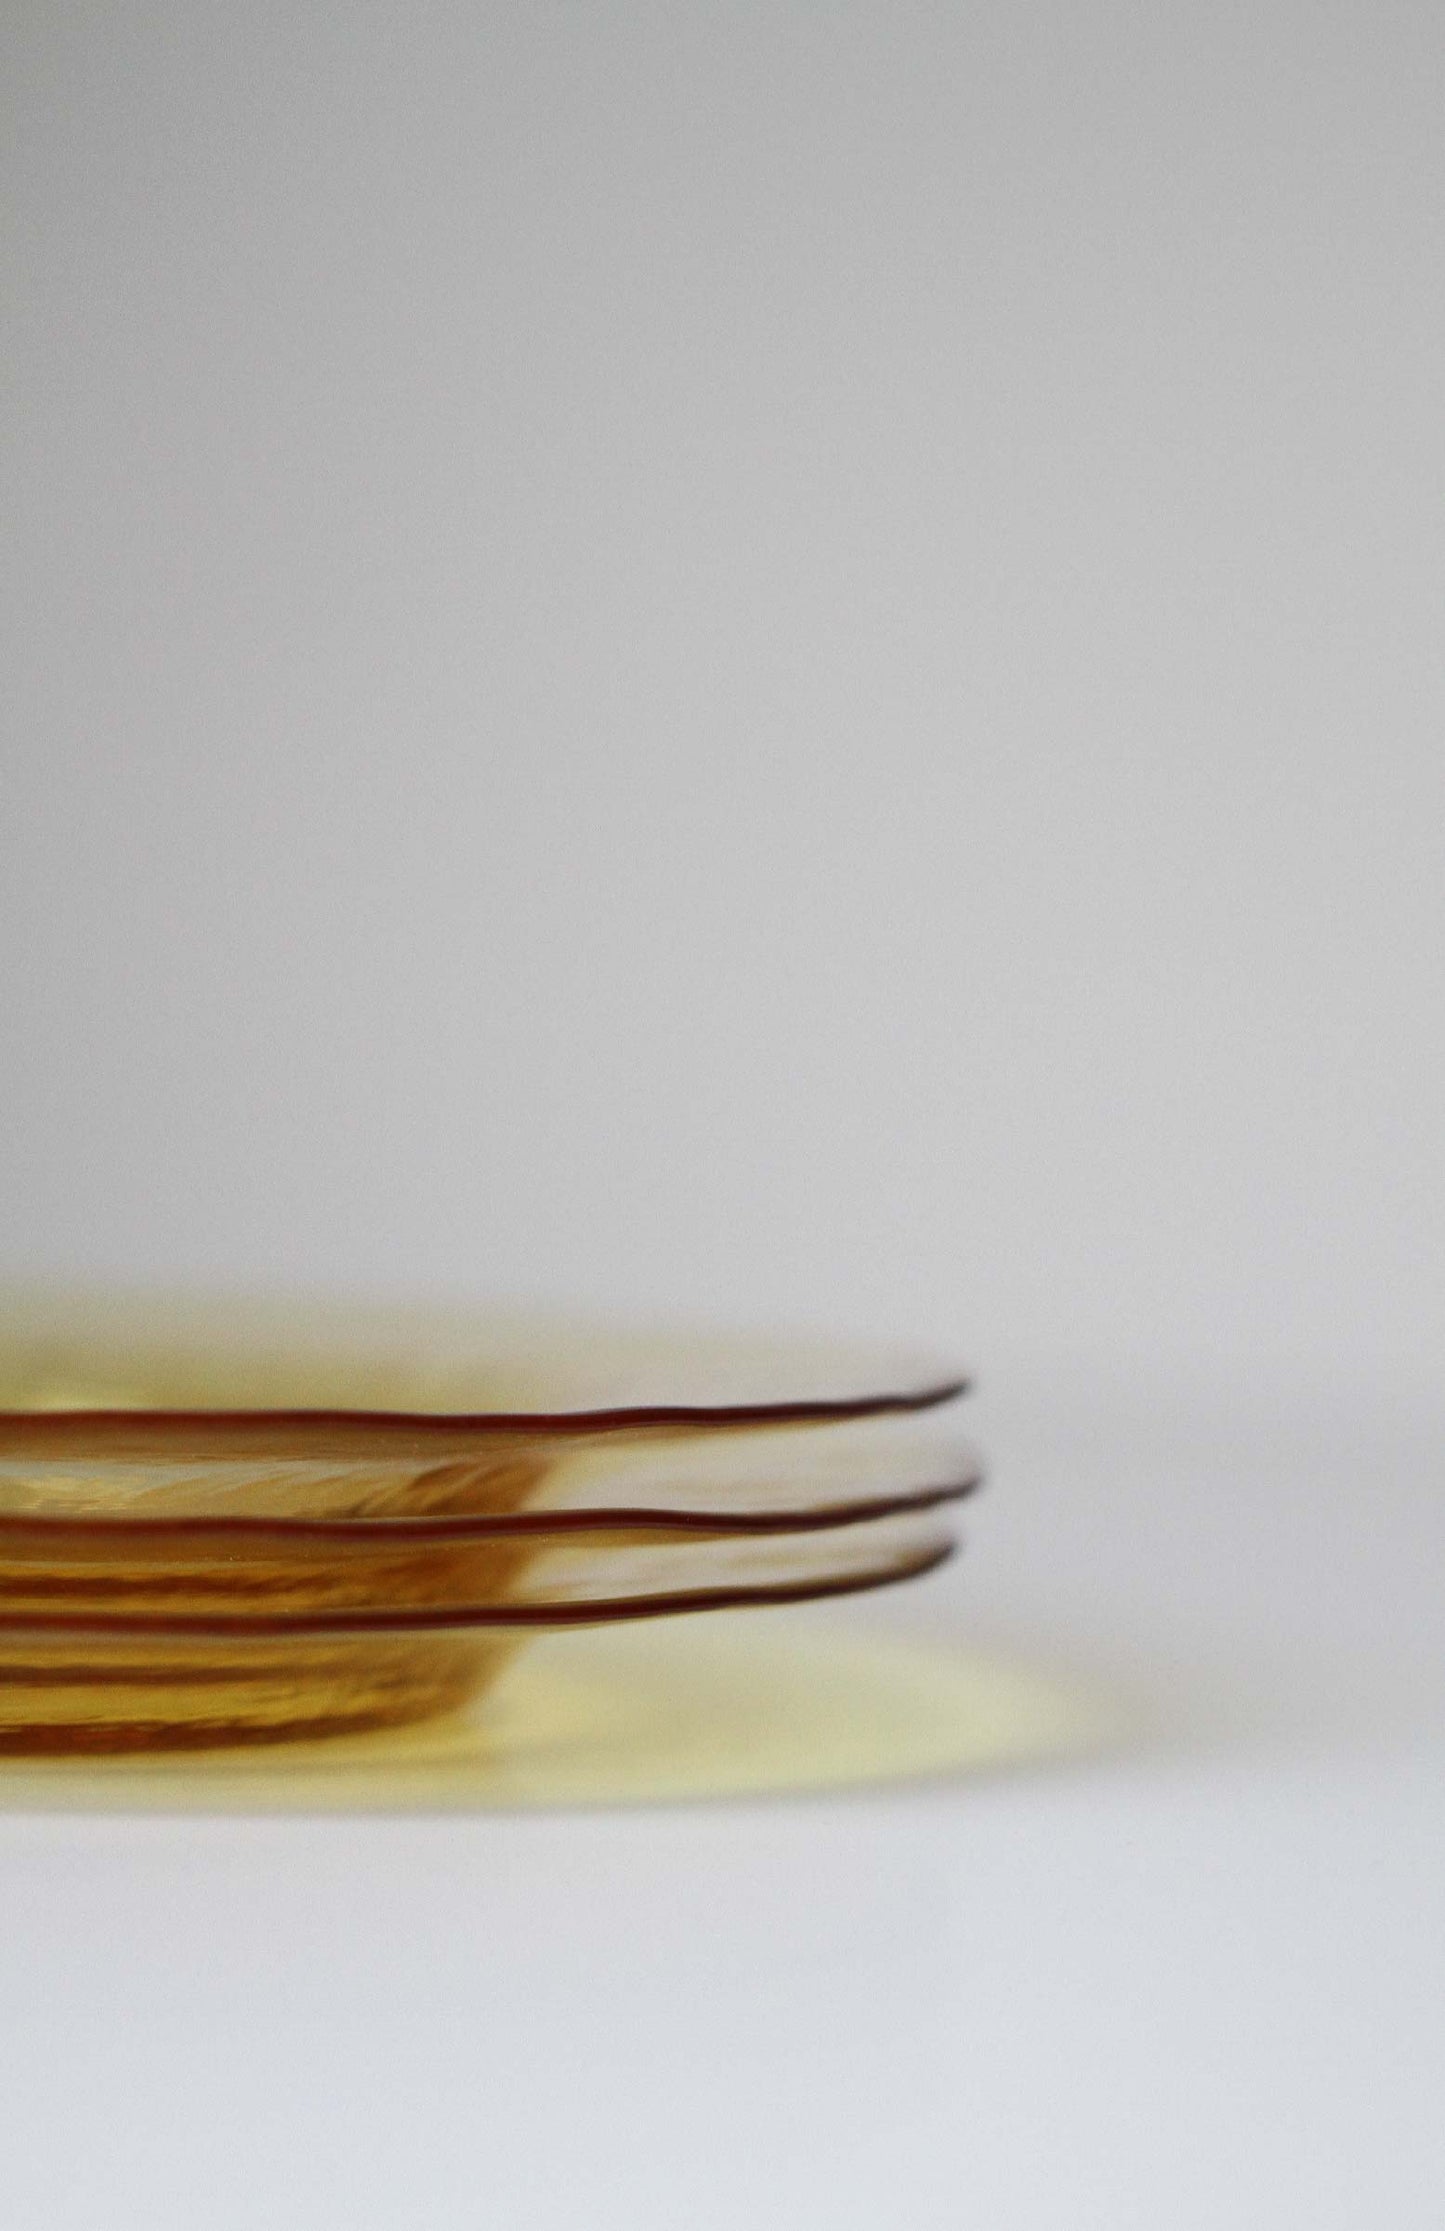 Handcraft Glass Plate — Yellow